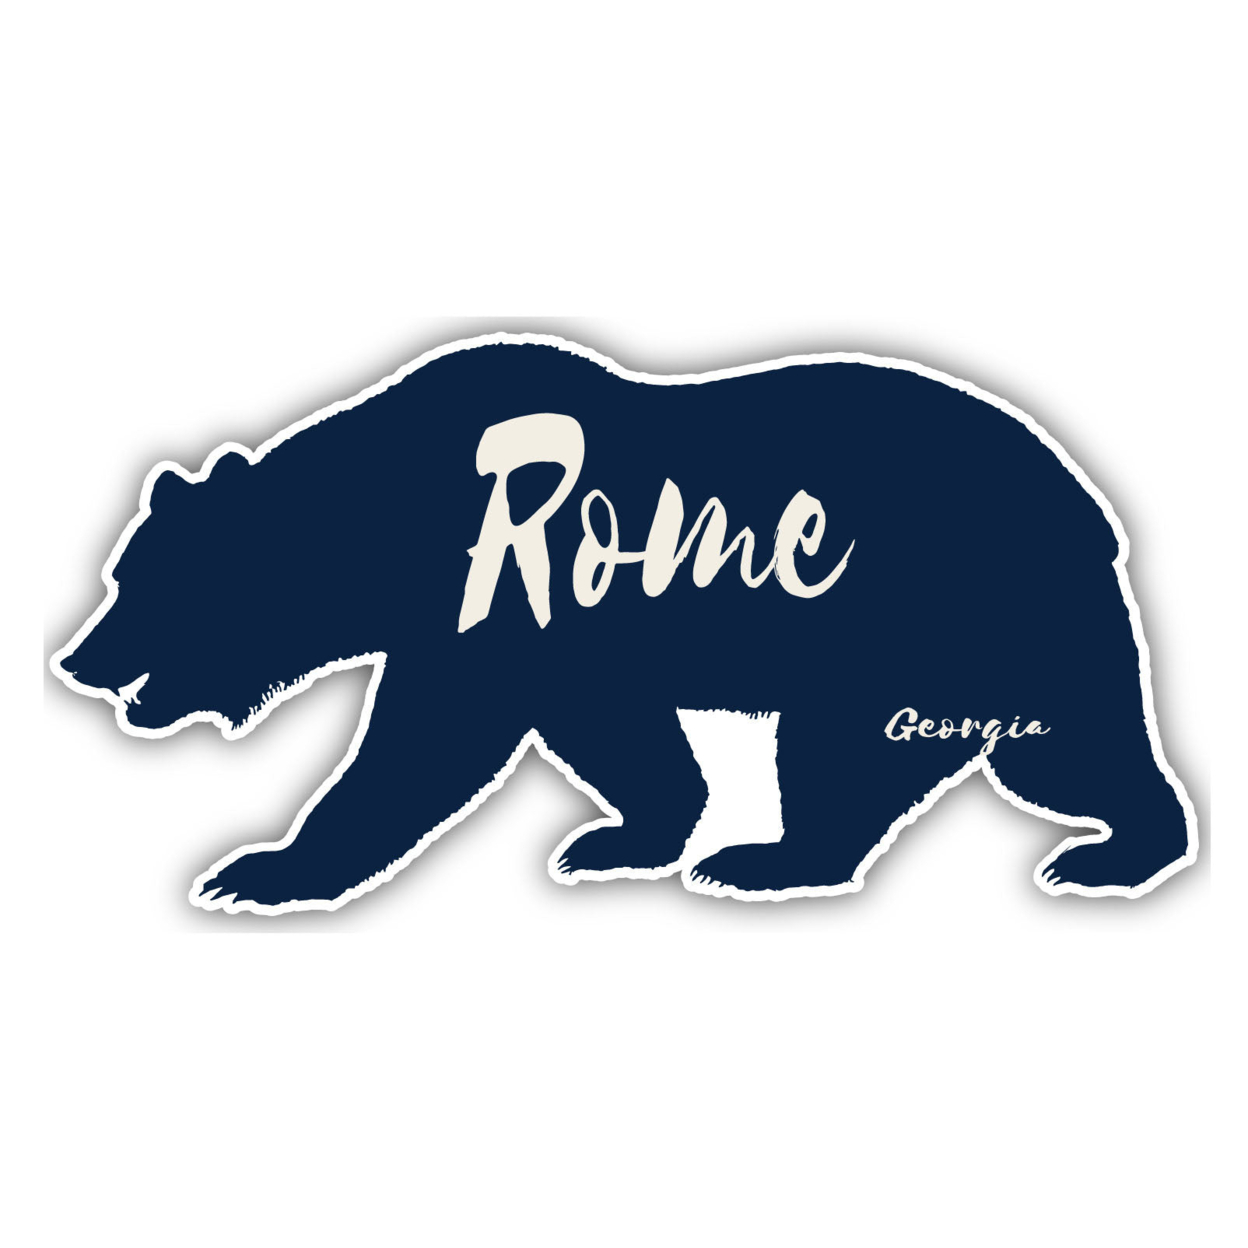 Rome Georgia Souvenir Decorative Stickers (Choose Theme And Size) - Single Unit, 4-Inch, Bear